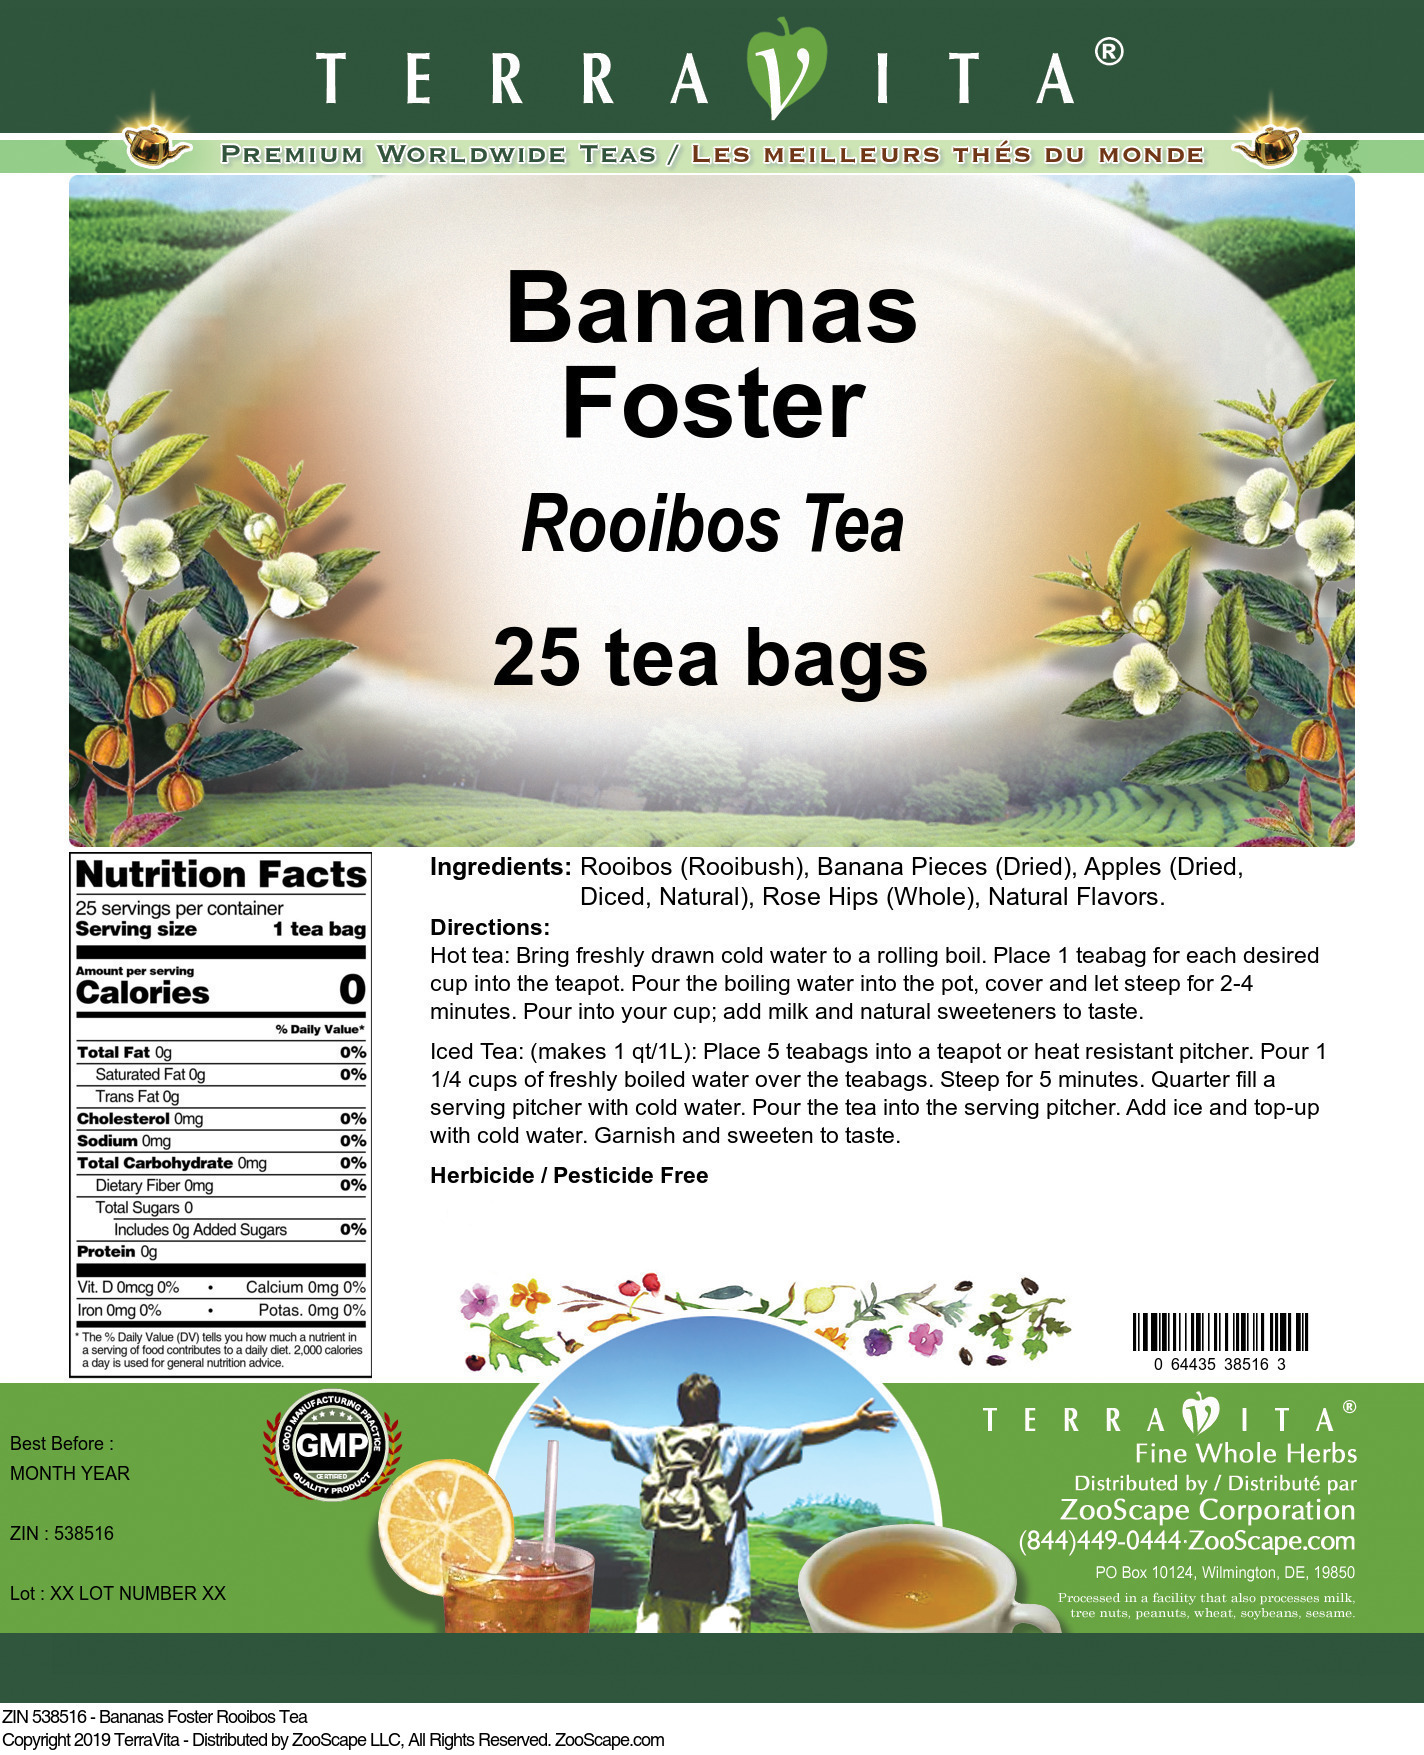 Bananas Foster Rooibos Tea - Label